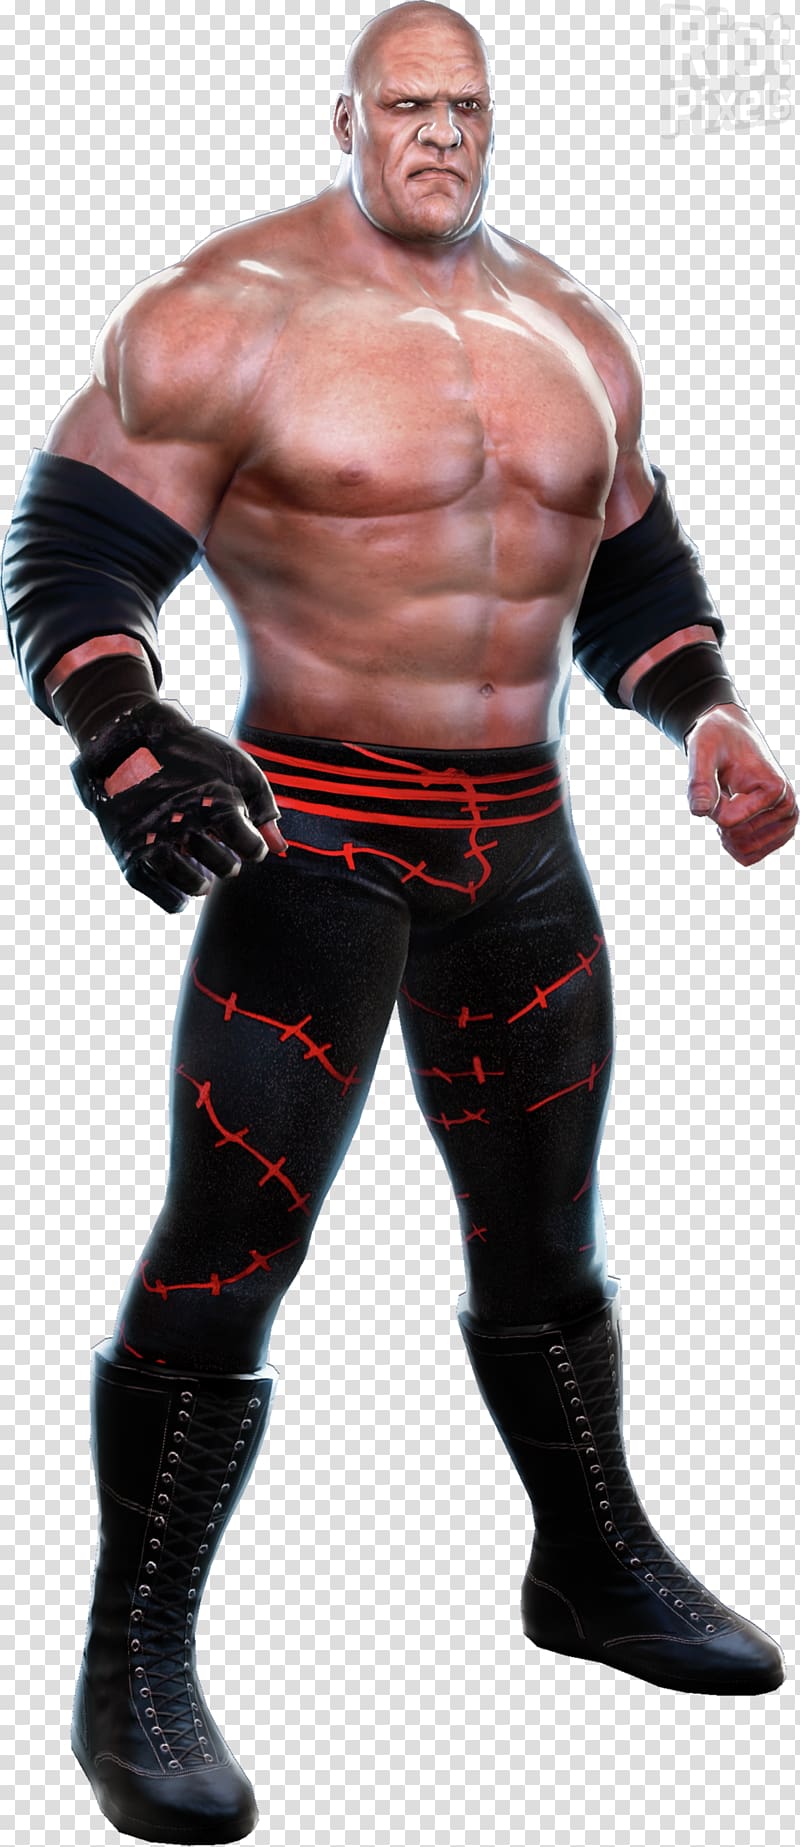 Kane WWE All Stars WWE Superstars The Brothers of Destruction, kane transparent background PNG clipart